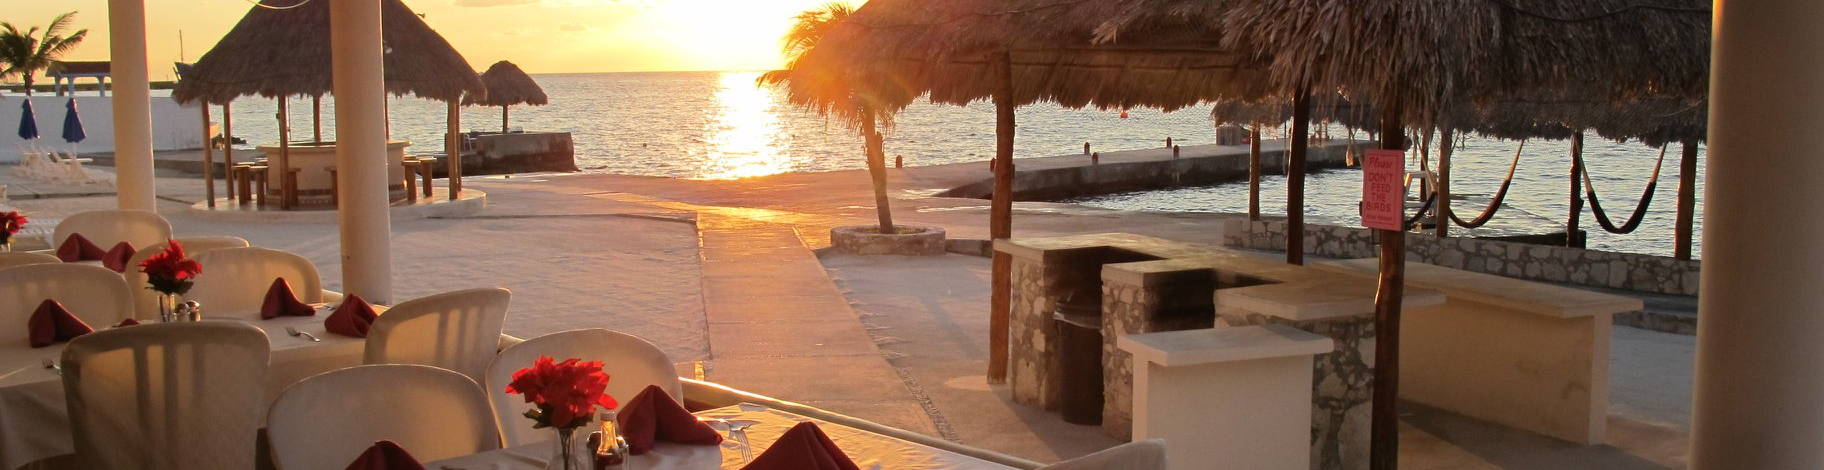 Scuba Club Cozumel Vacation, Cozumel Vacations, Vacation Scuba Club Cozumel,  Mexico – Roatan Charter